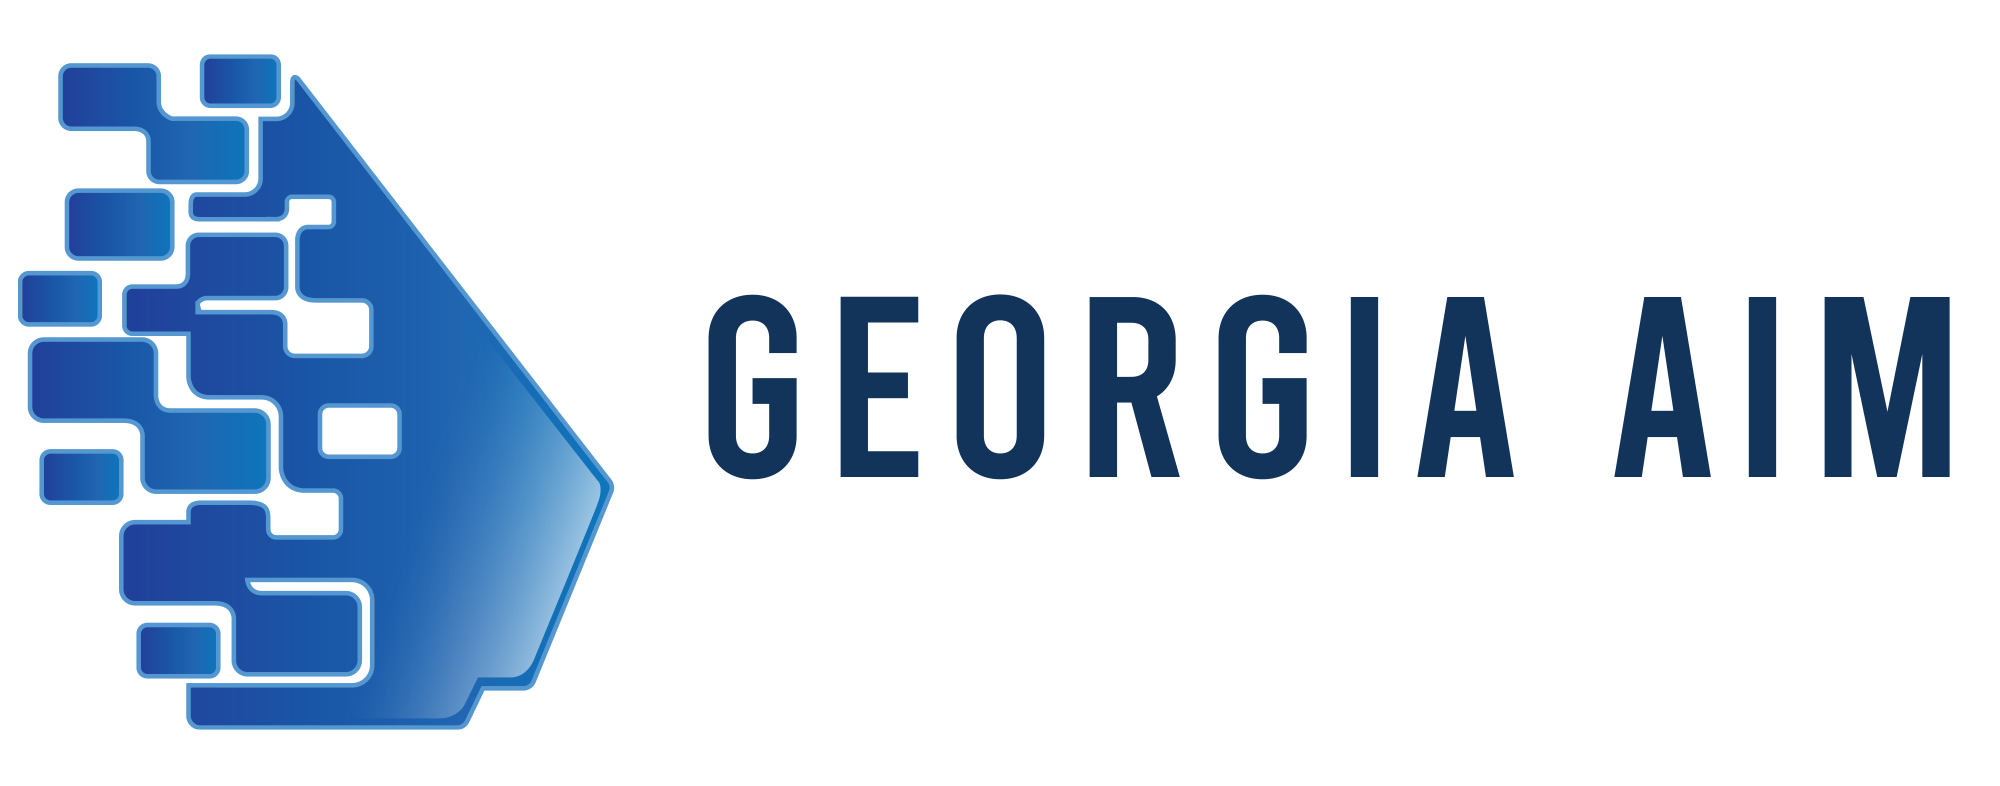 Shape of Georgia with the words Georgia AIM next to it